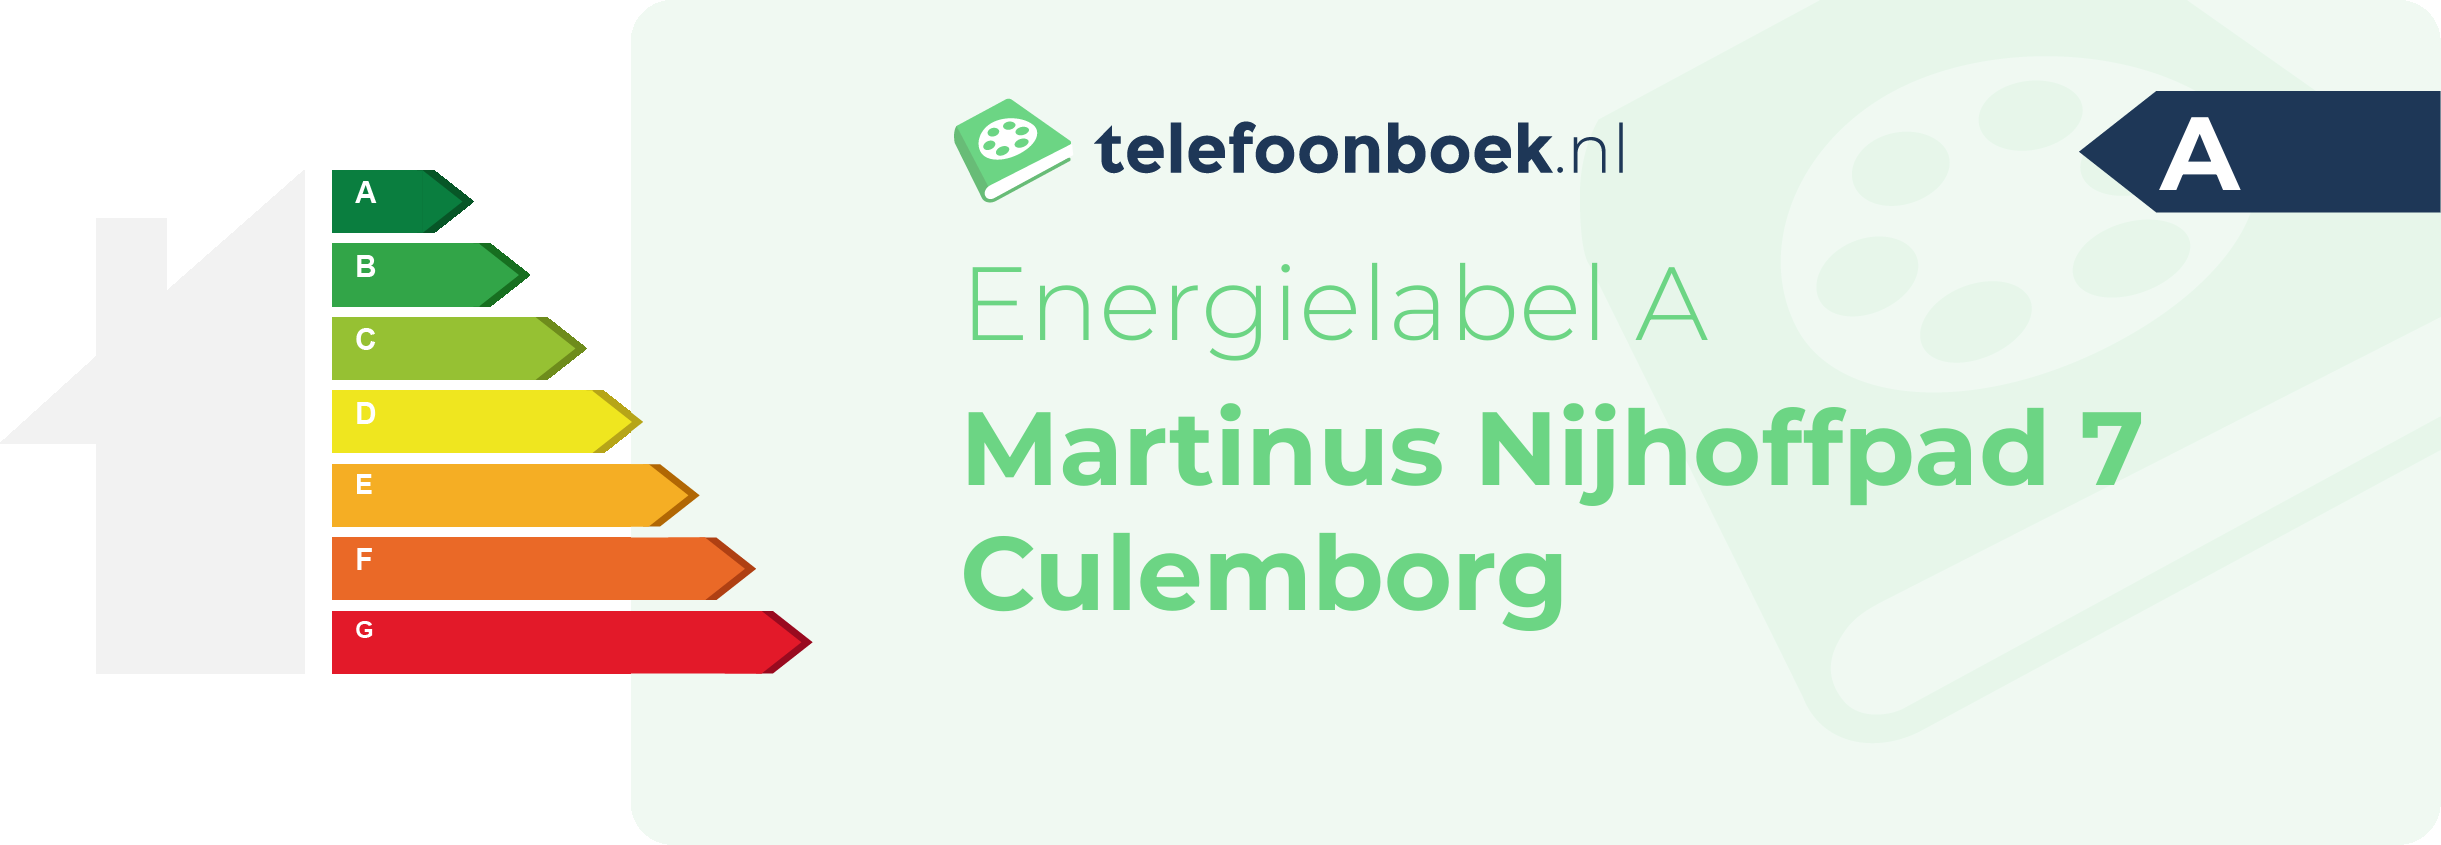 Energielabel Martinus Nijhoffpad 7 Culemborg